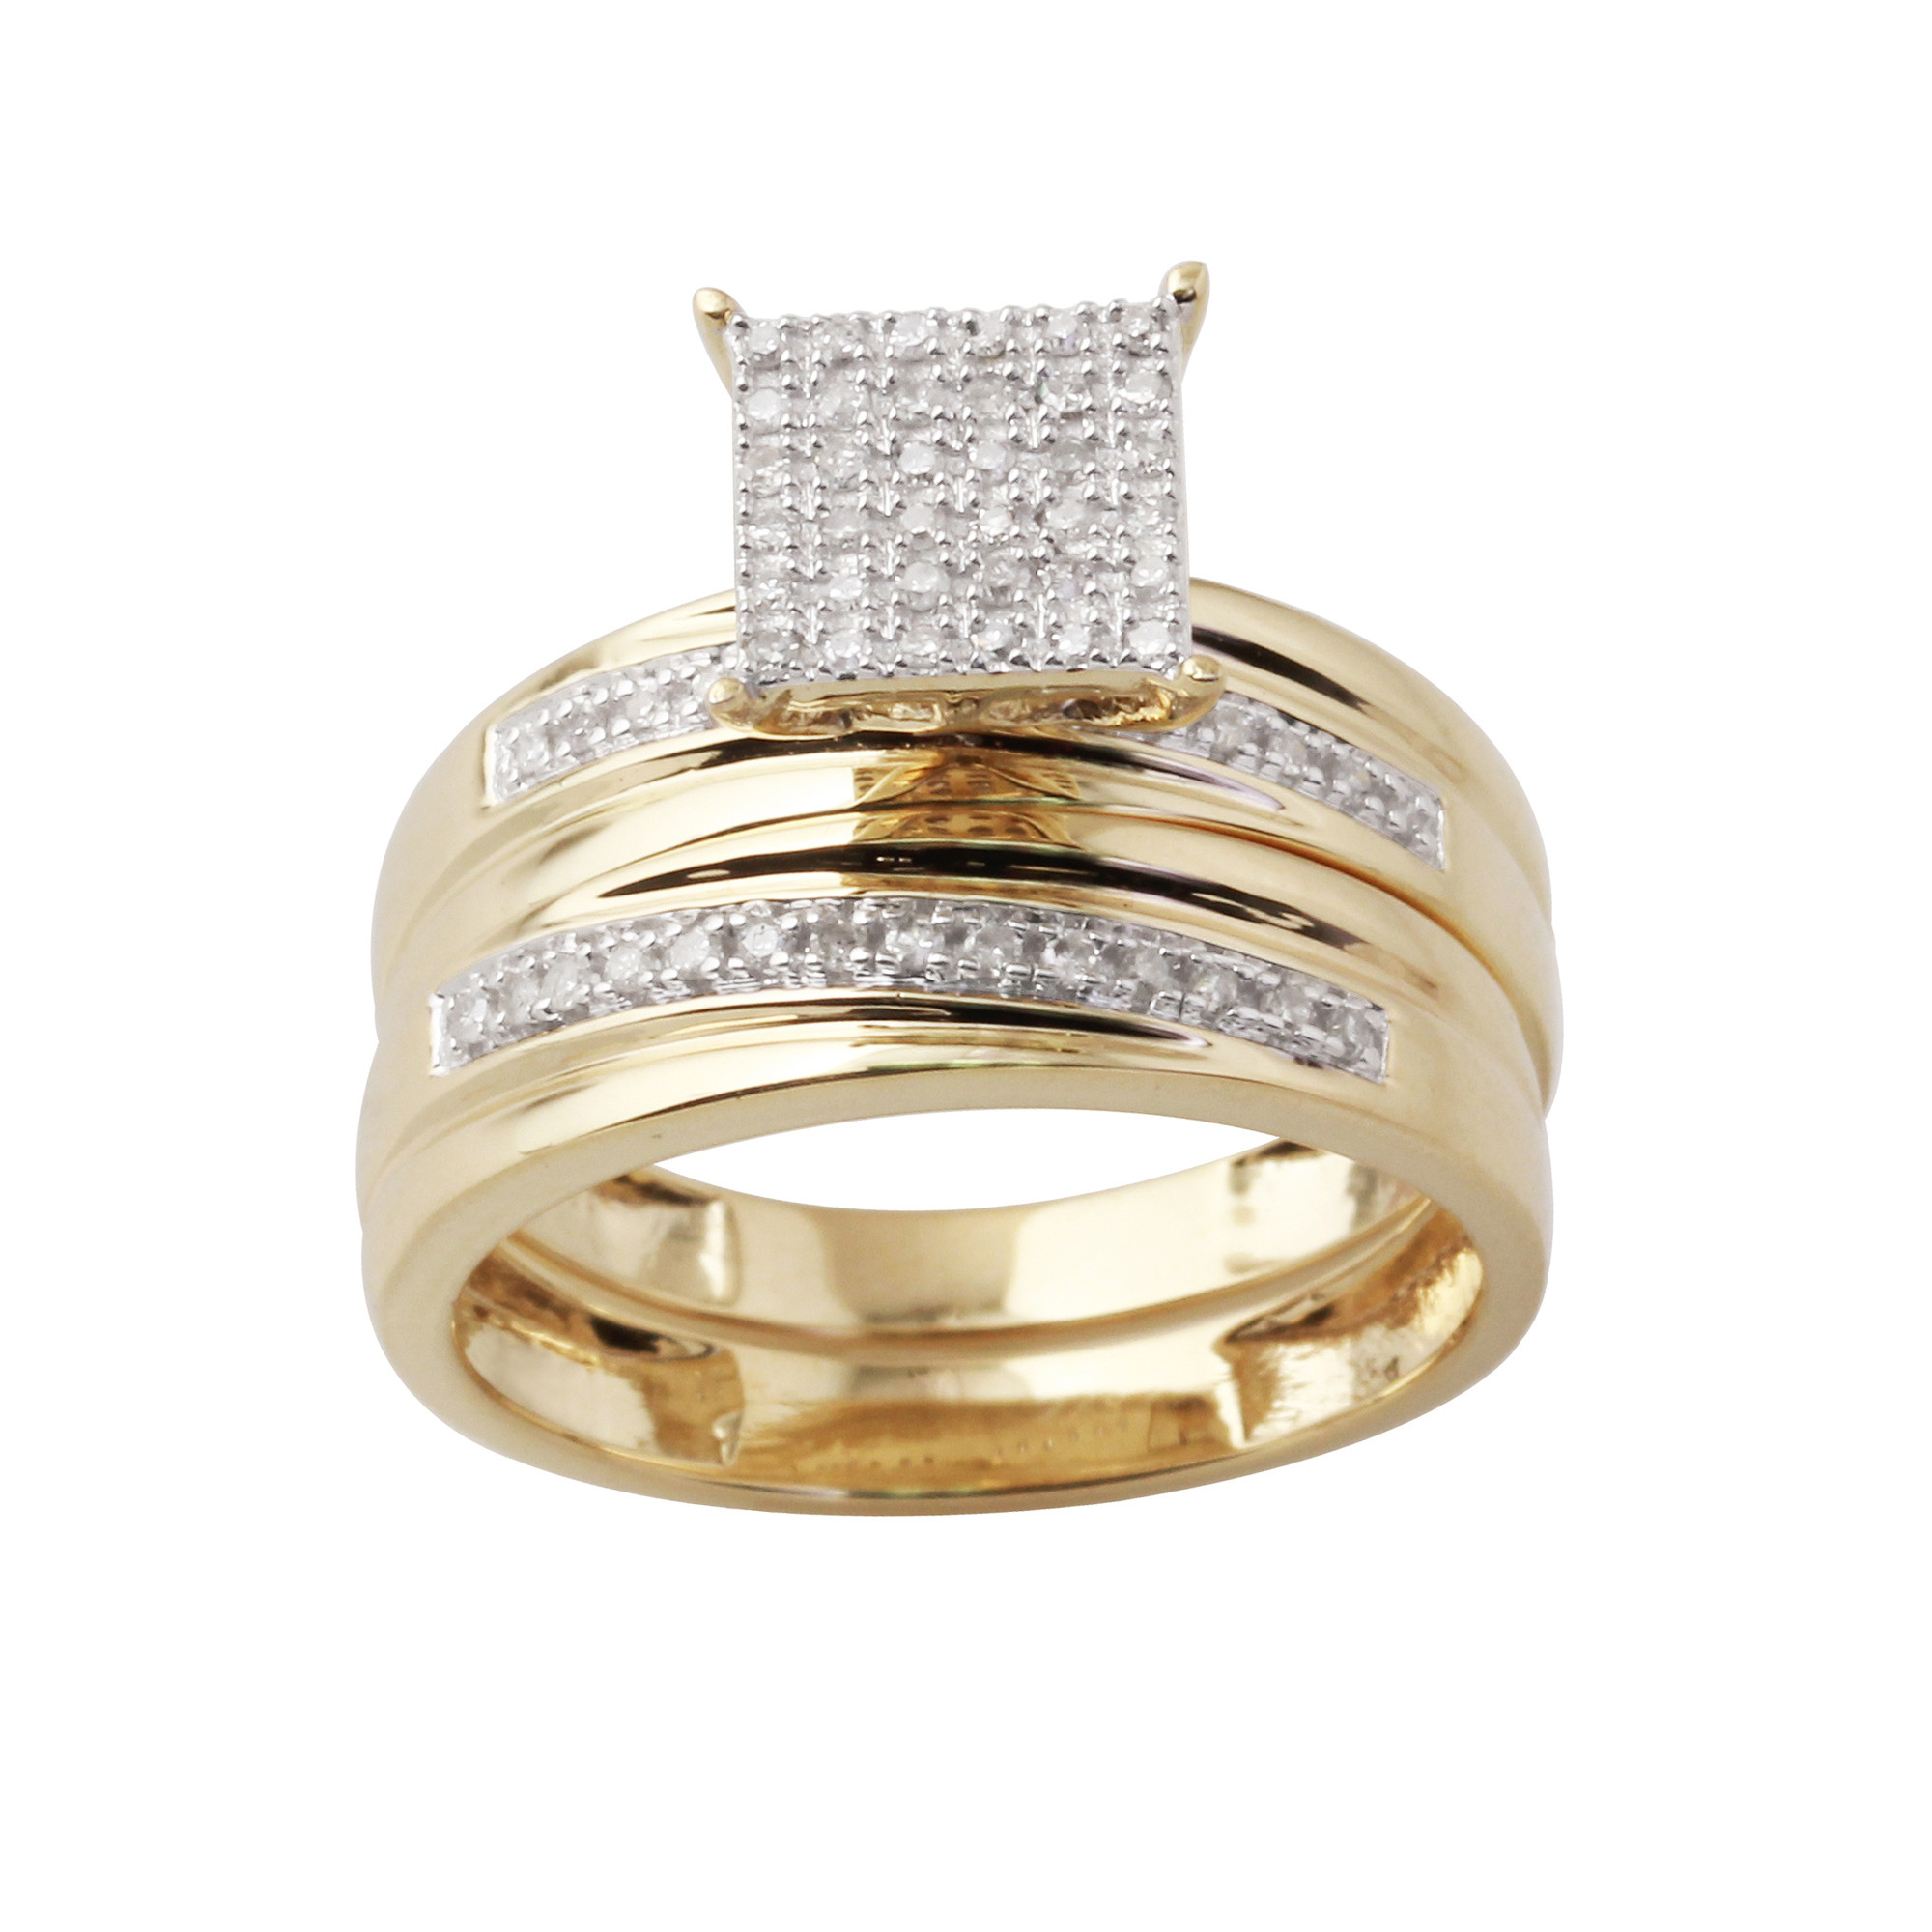 Kmart Wedding Ring Sets
 Engagement Bridal Set